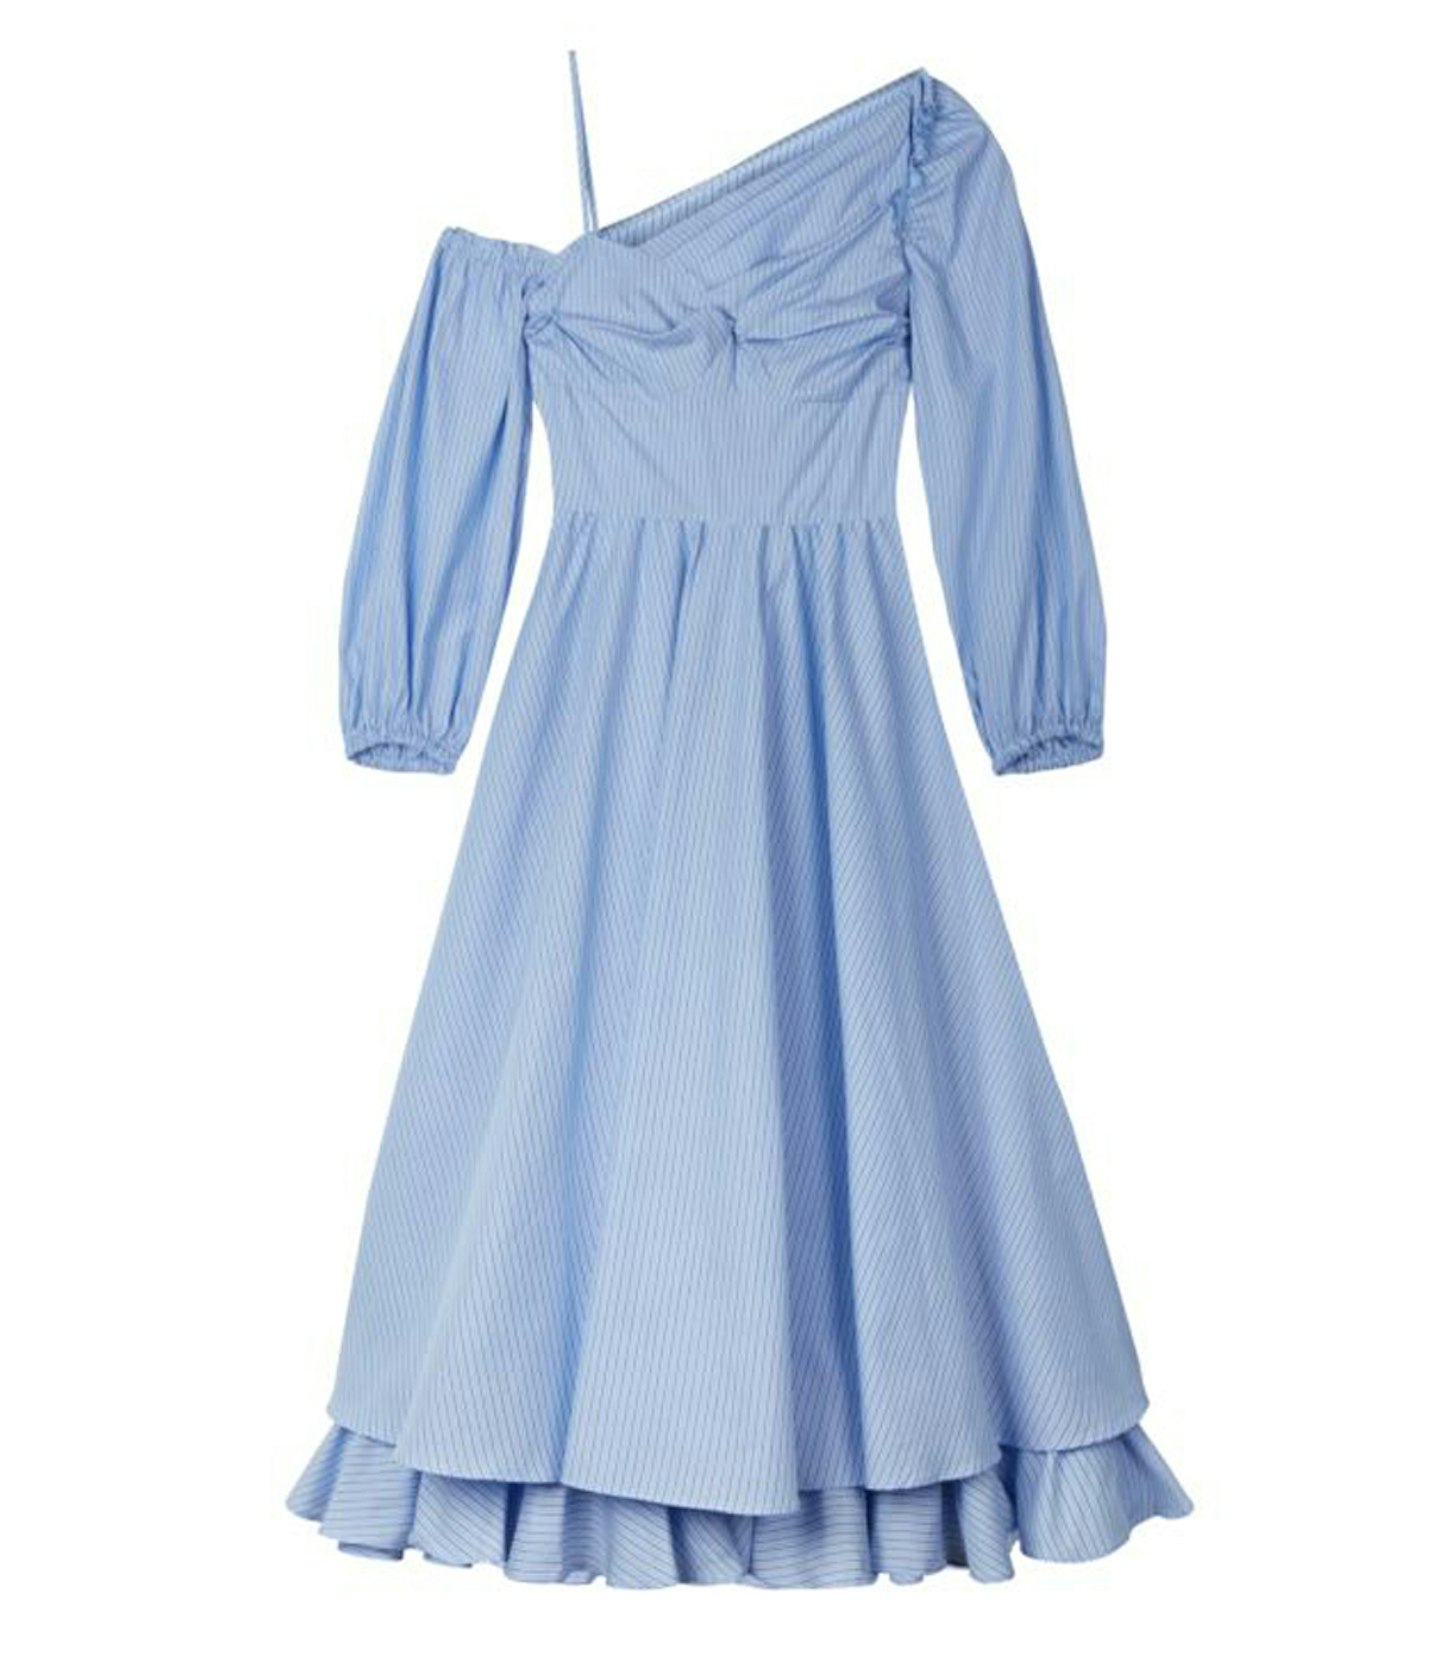 ALEXACHUNG, One Shoulder Dress, £470